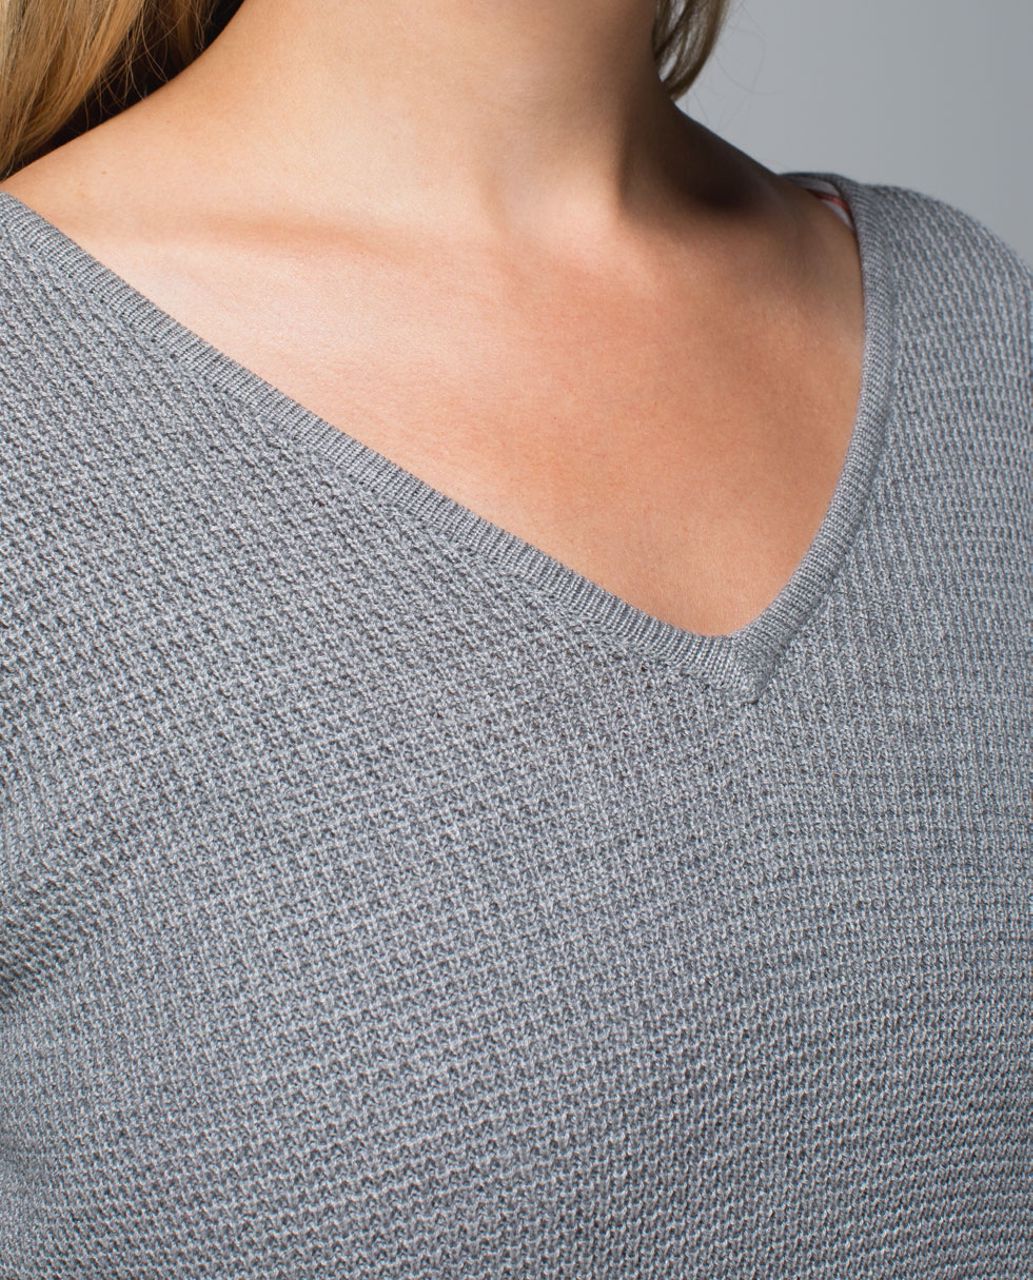 Lululemon The Sweater Life - Heathered Medium Grey